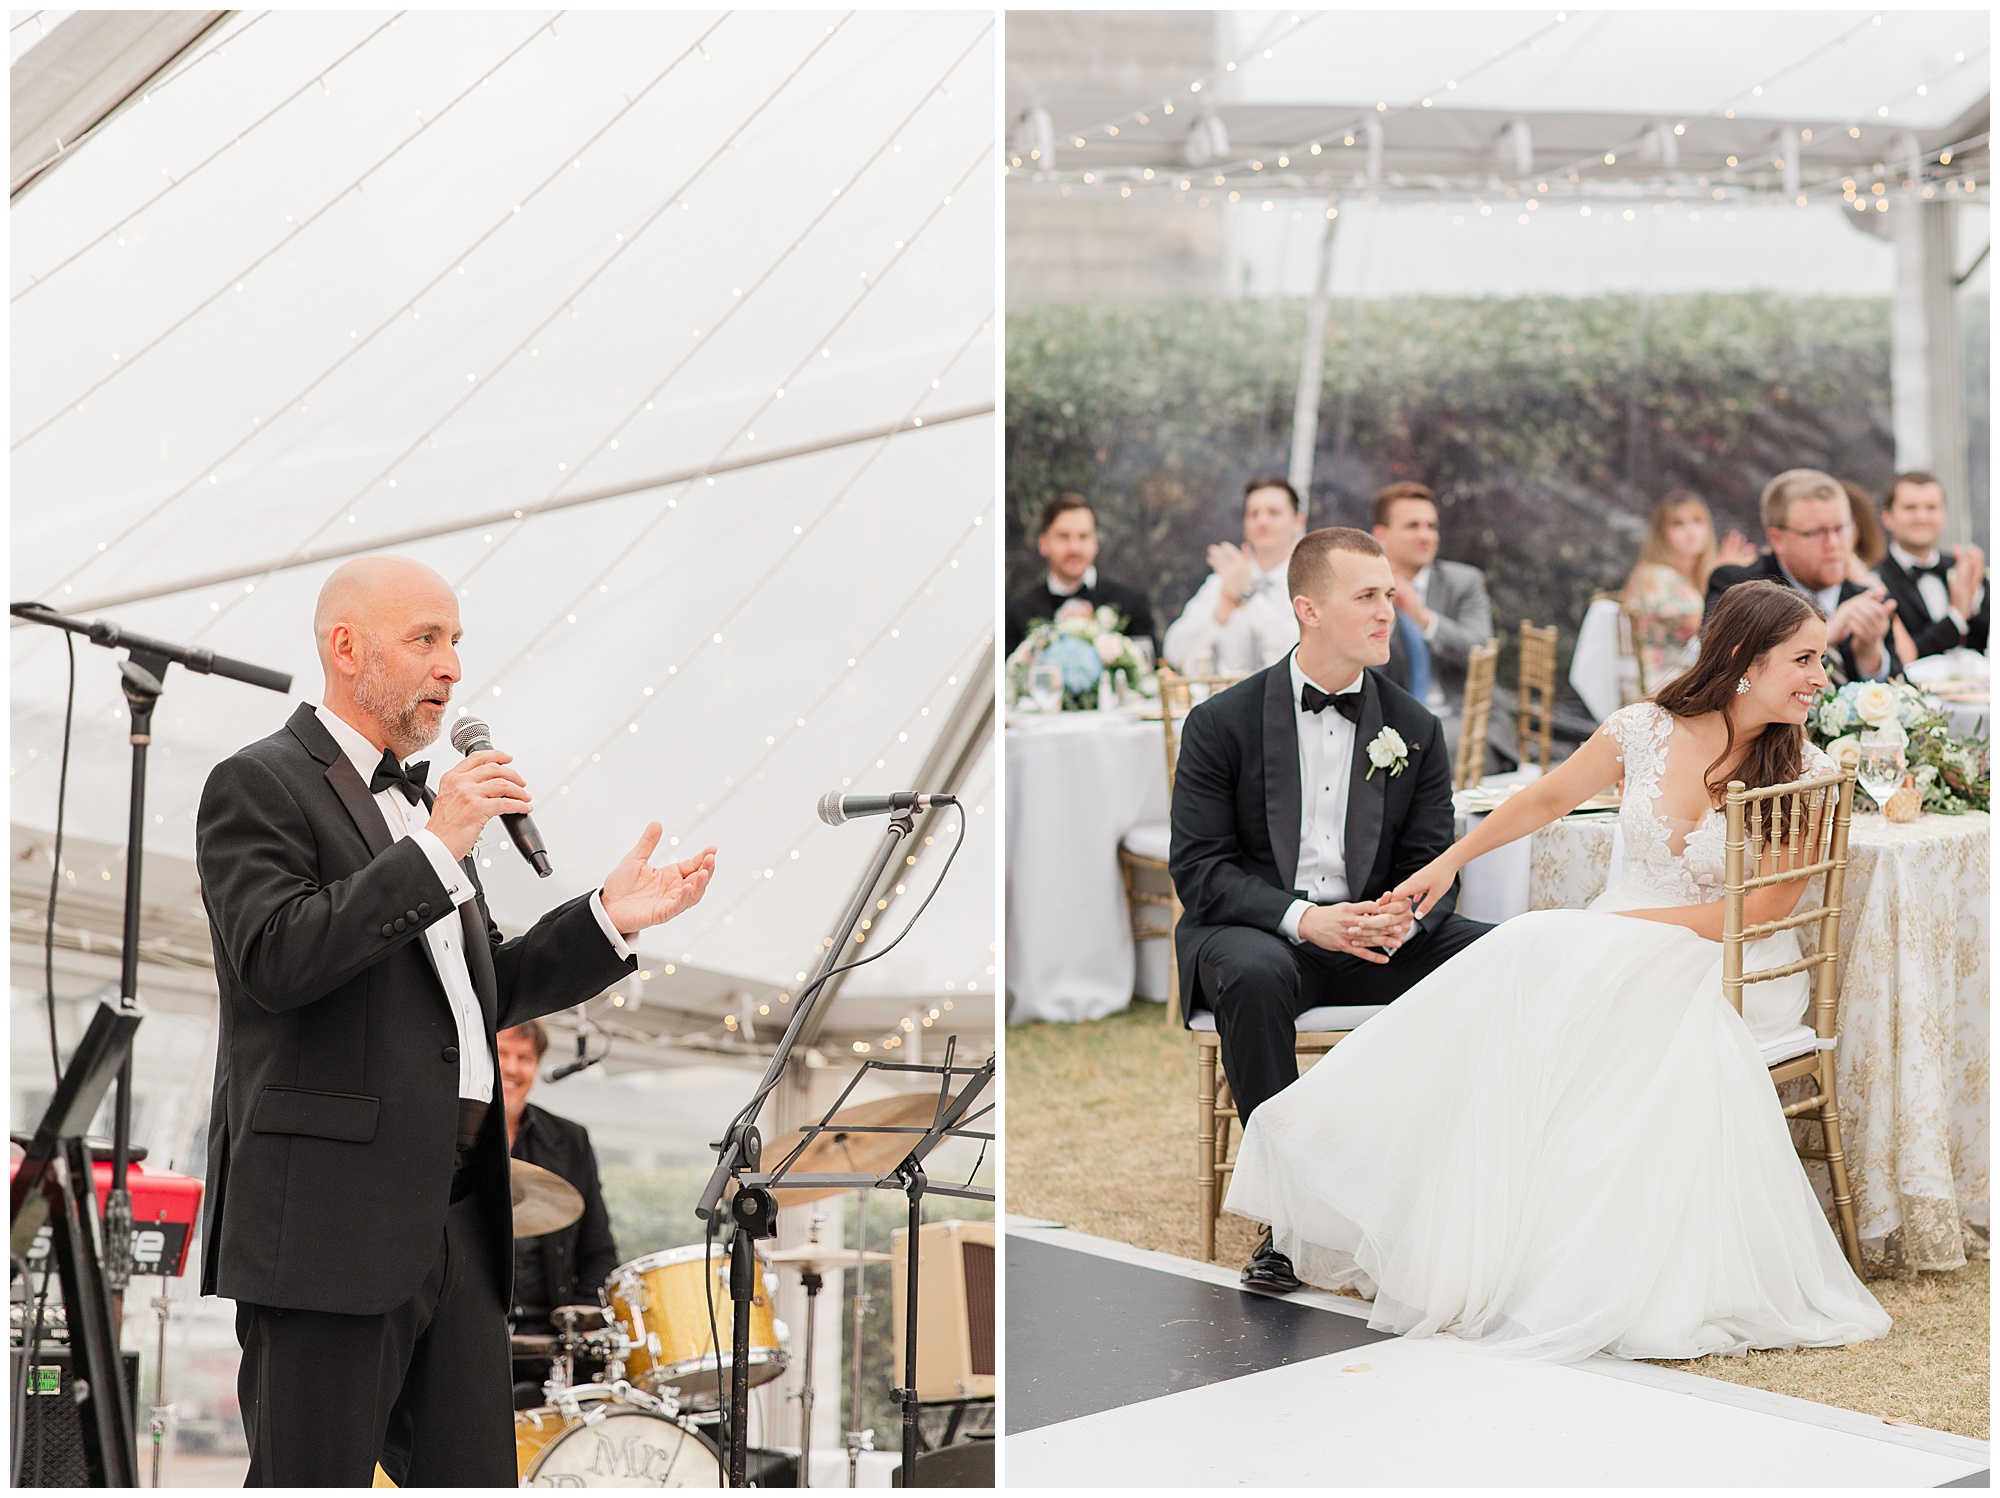 Danielle & Chris, East Beach Bay Front Club wedding, Hampton Roads weddings, Kelley Stinson Photography, father of the bride